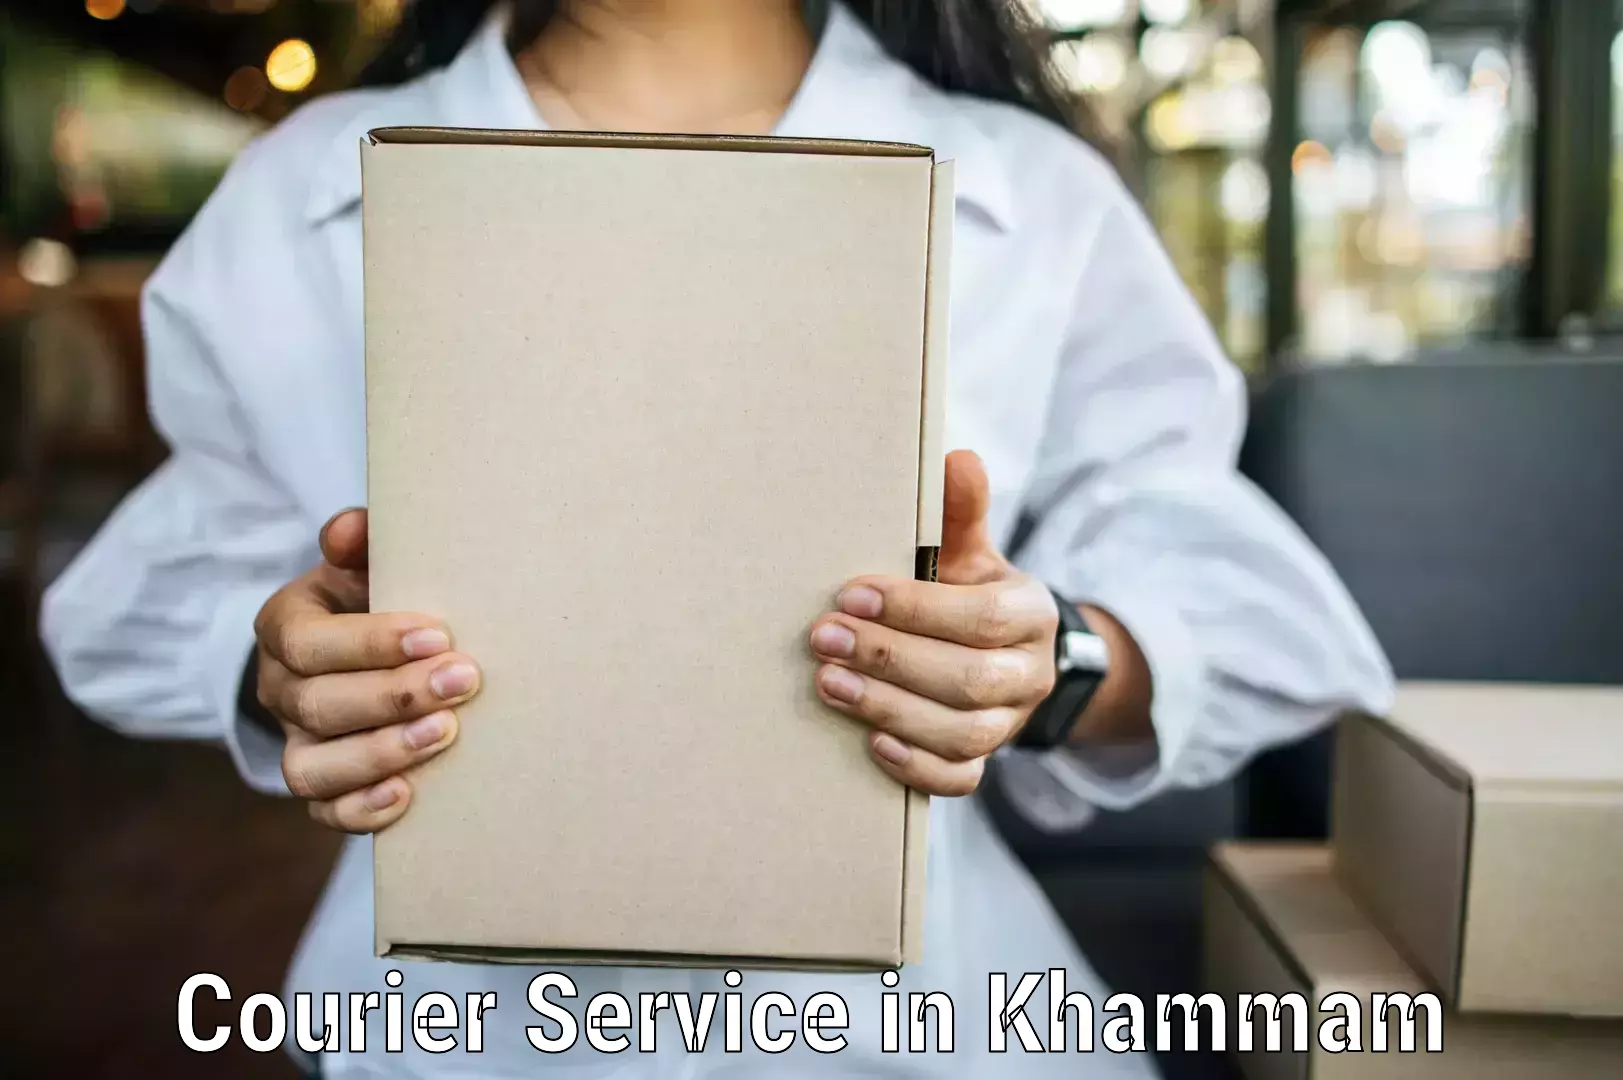 Advanced shipping network in Khammam